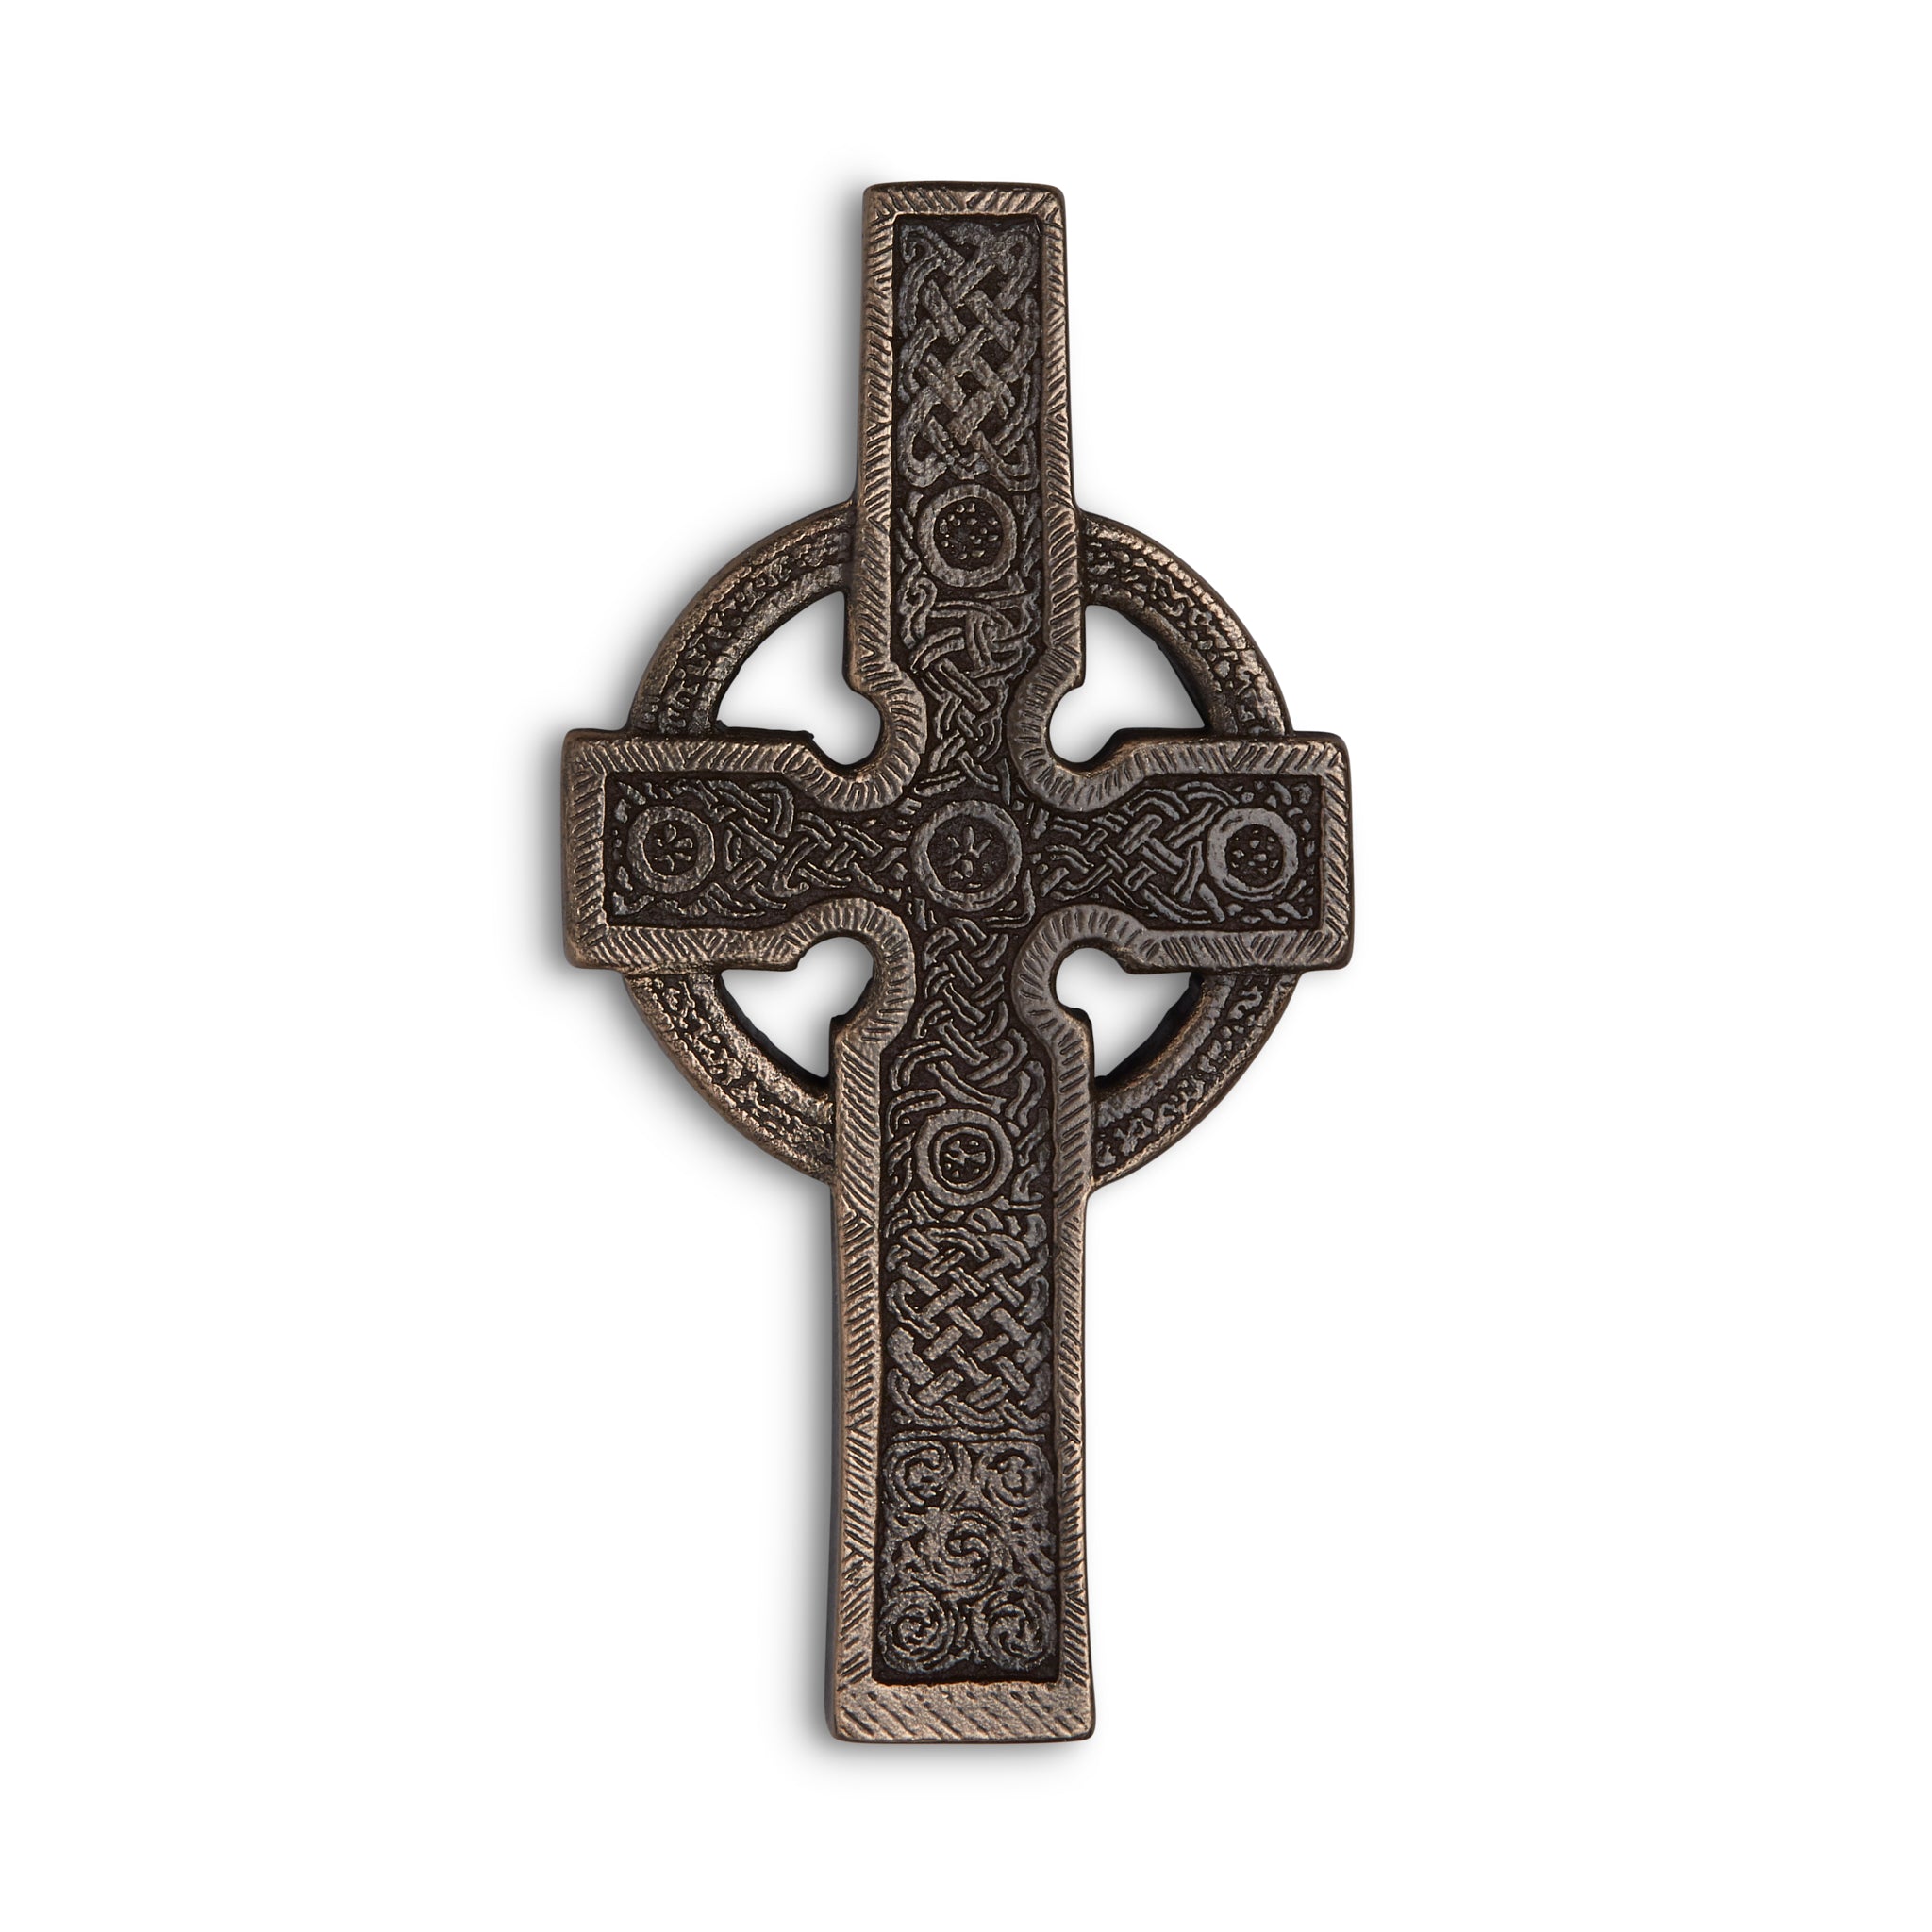 Celtic Cross Patch - HouseOspeed